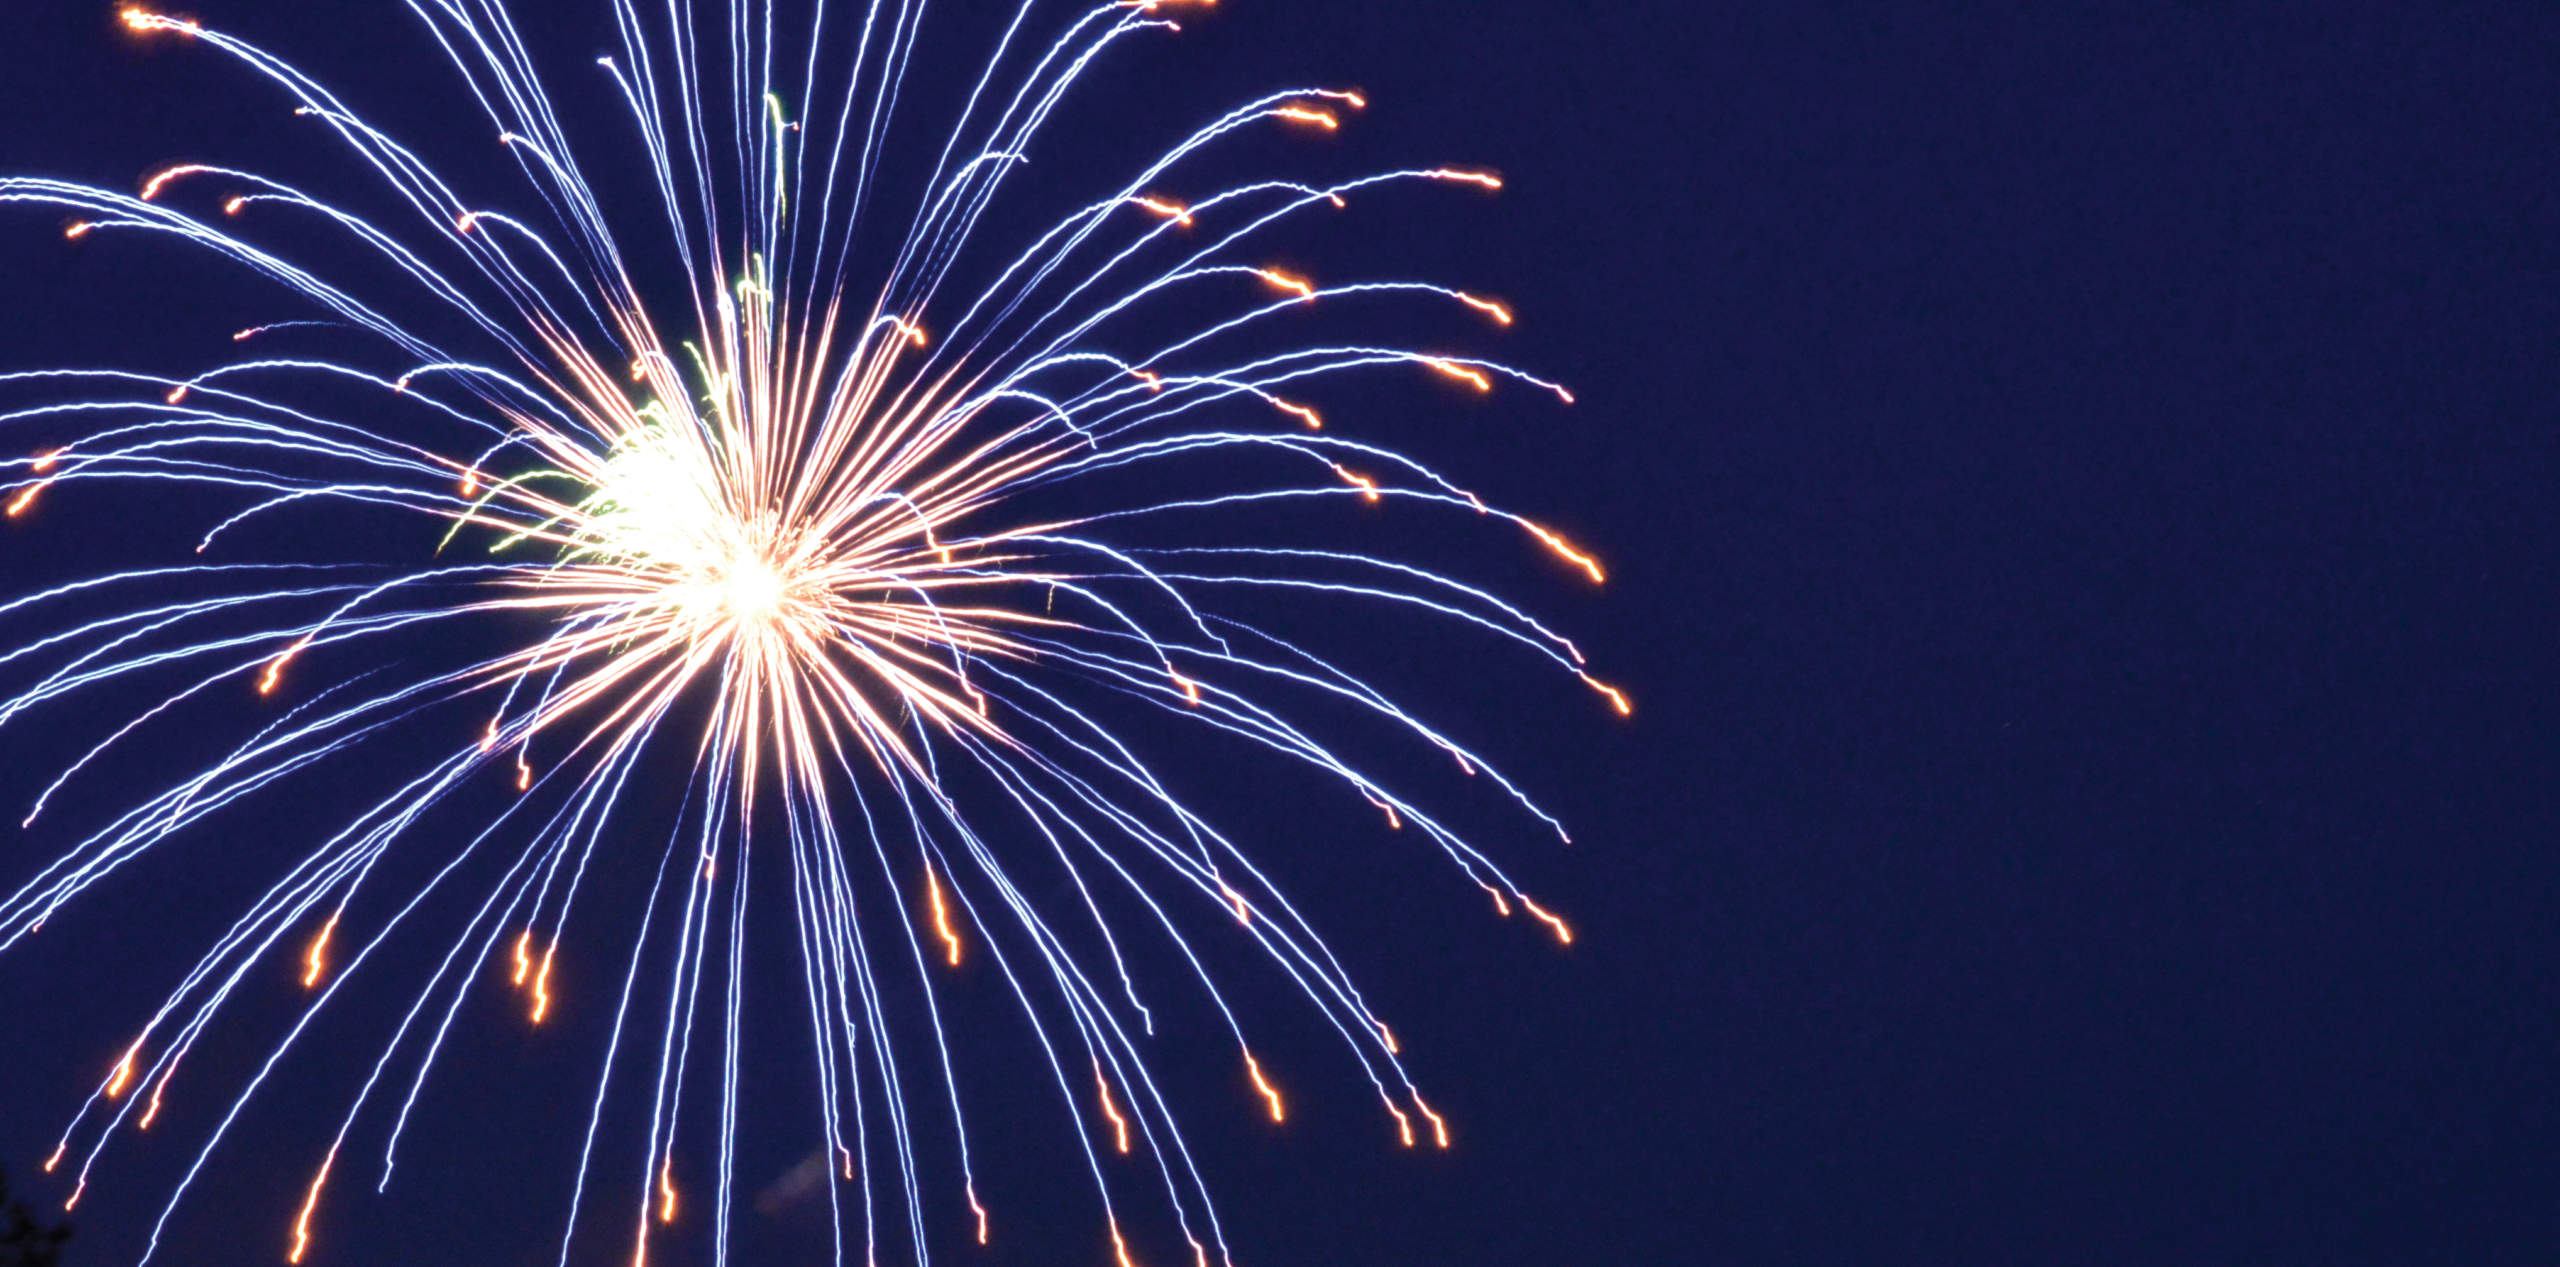 Fireworks show in Altoona